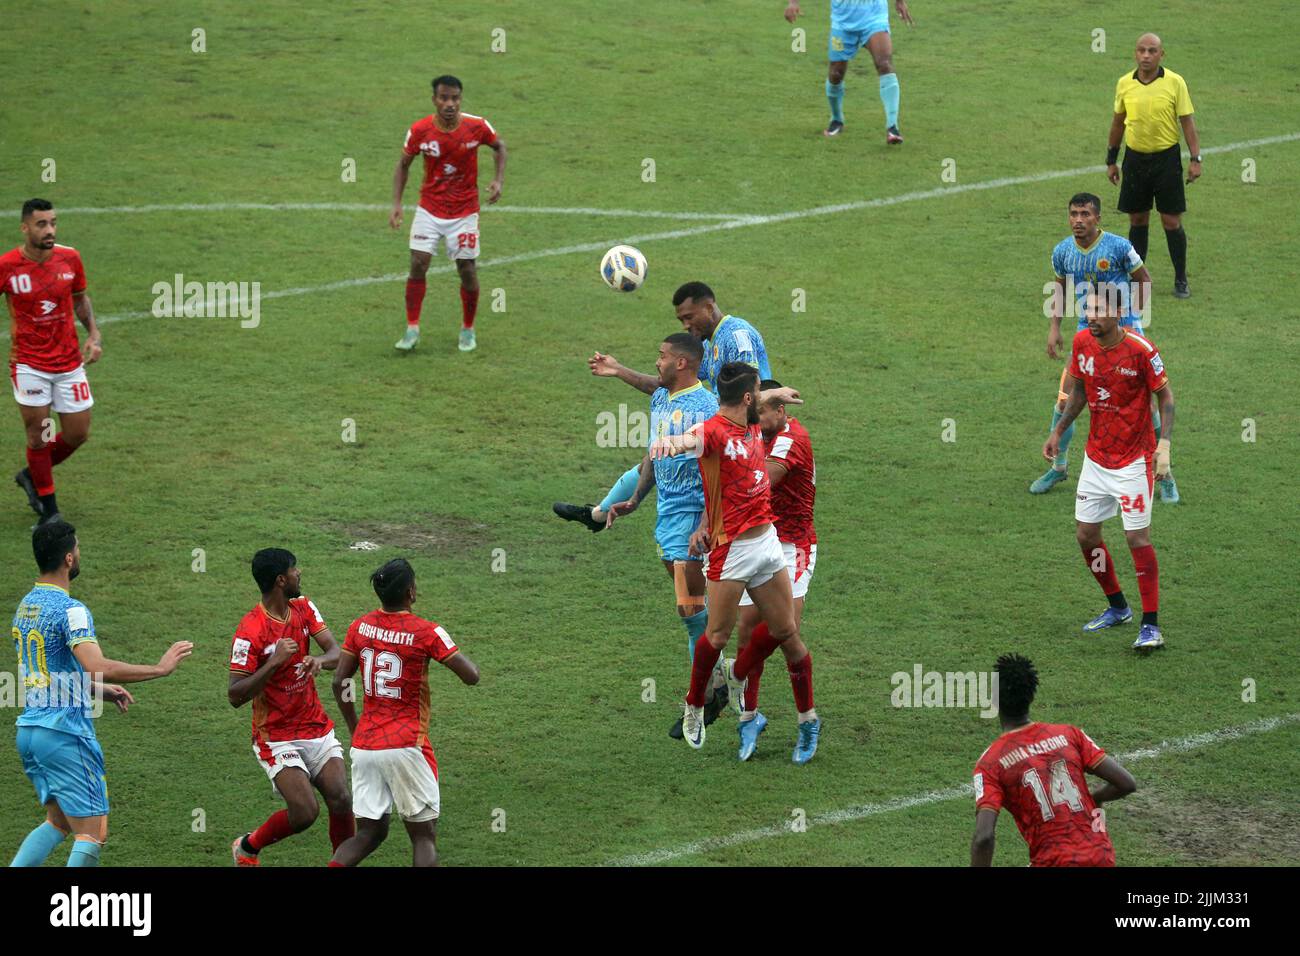 Bangladesh Premier League match between Basundhra Kings and Abahani Ltd. At the Bashundhara Kings Sports Arena, Dhaka, Bangladesh. While Basundhara Ki Stock Photo